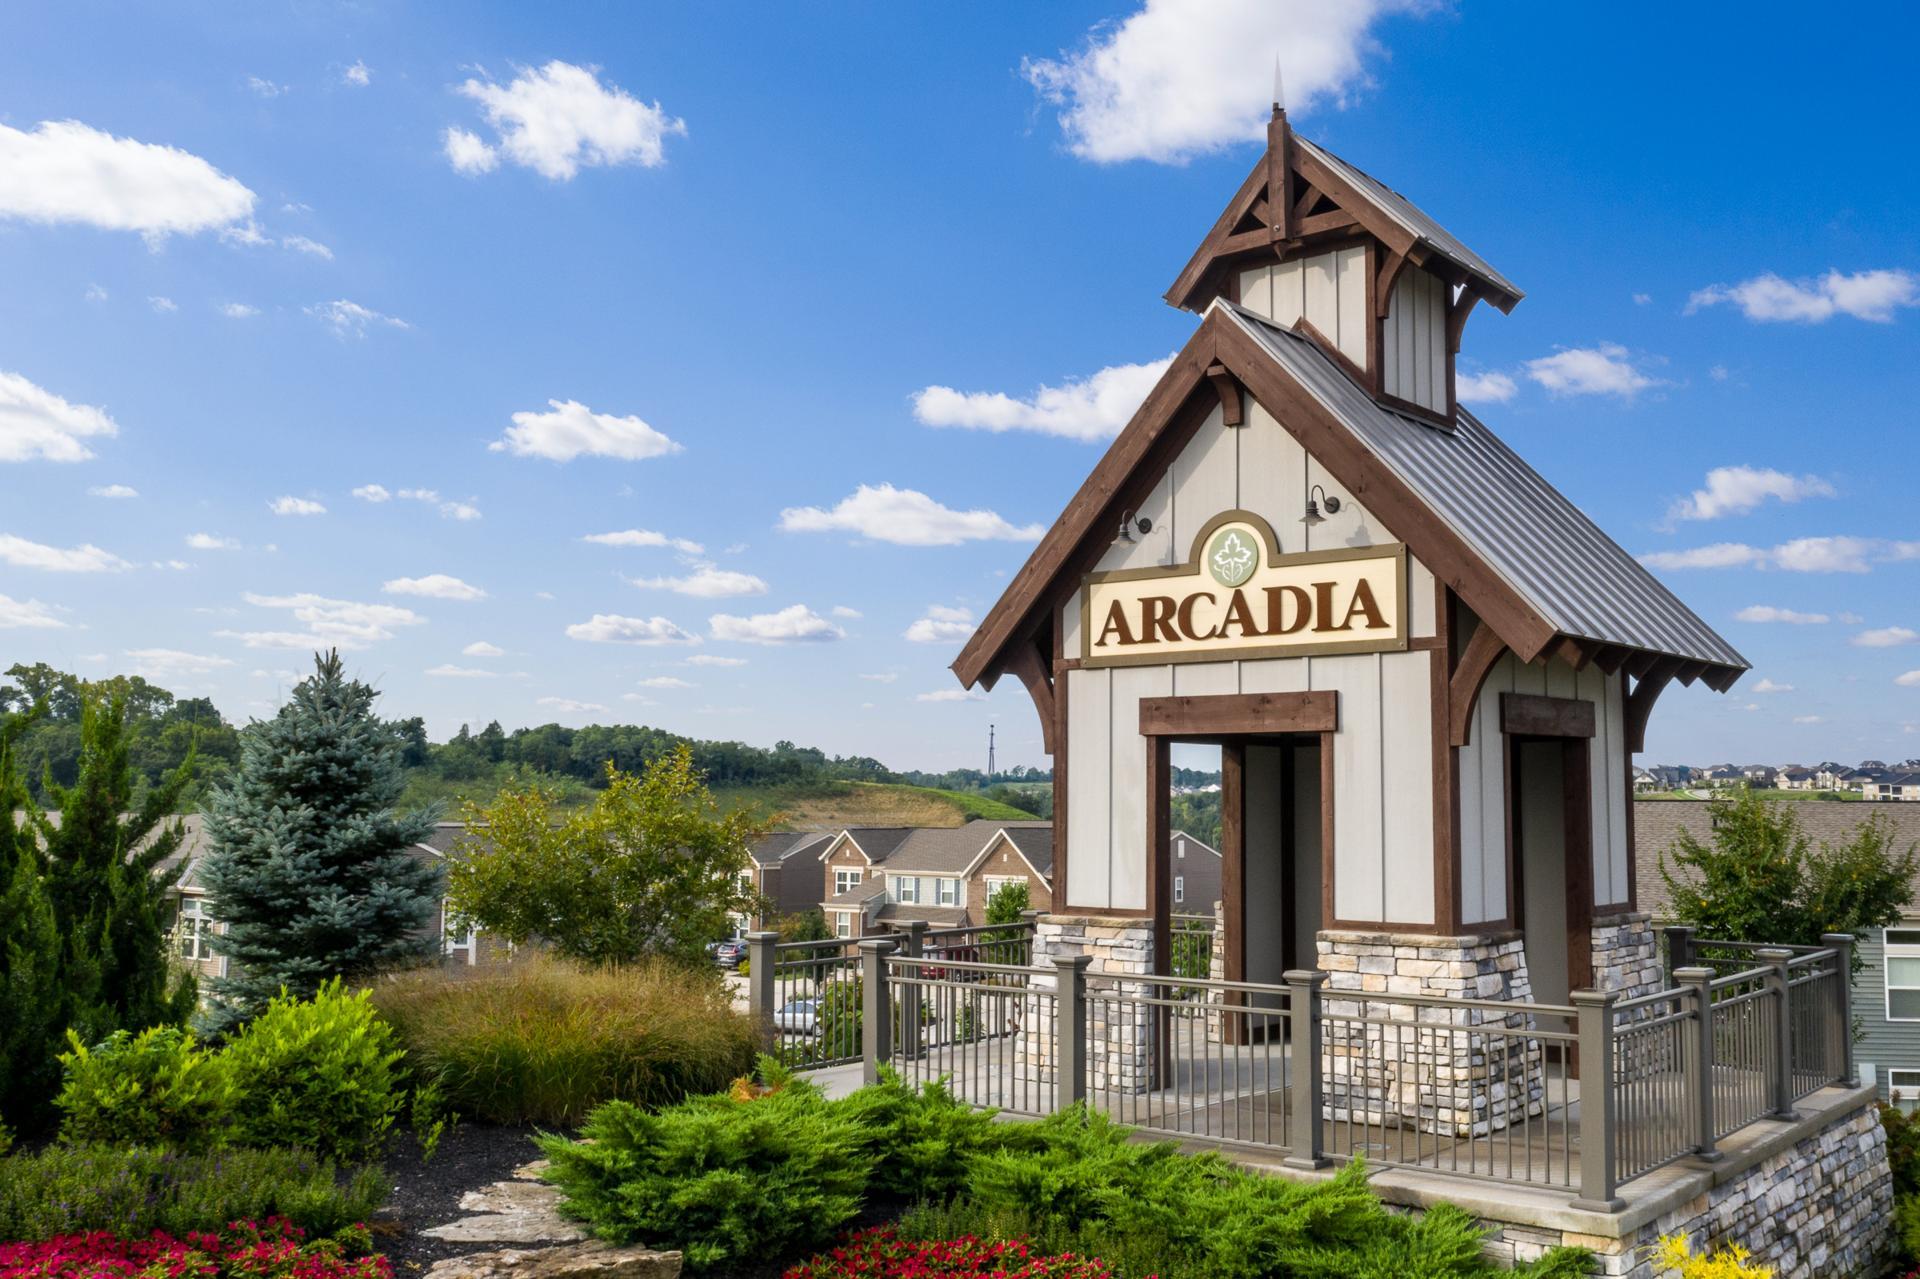 The Arcadia entrance